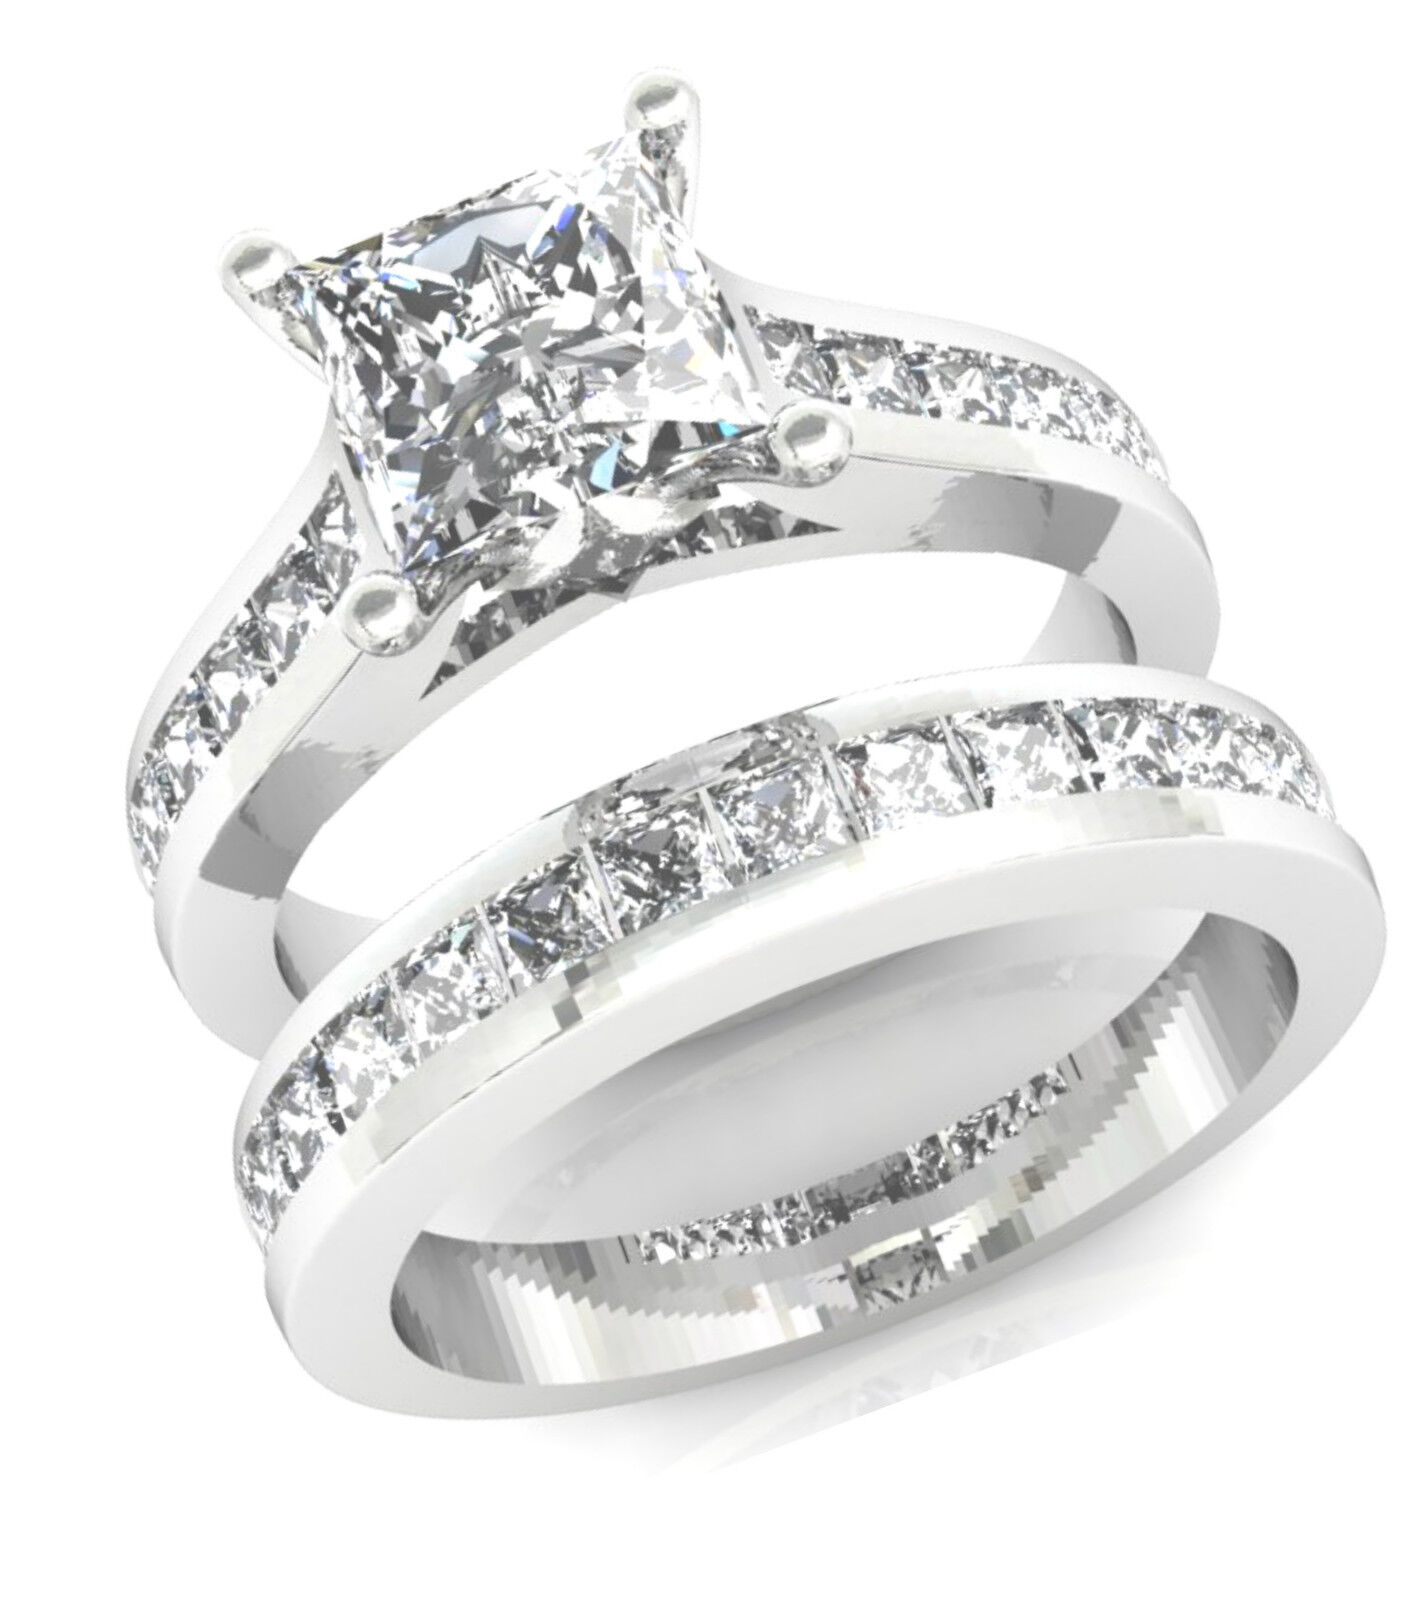 3.25ct Princess cut Diamond Engagement Ring Wedding Band Solid 14k White Gold Angus